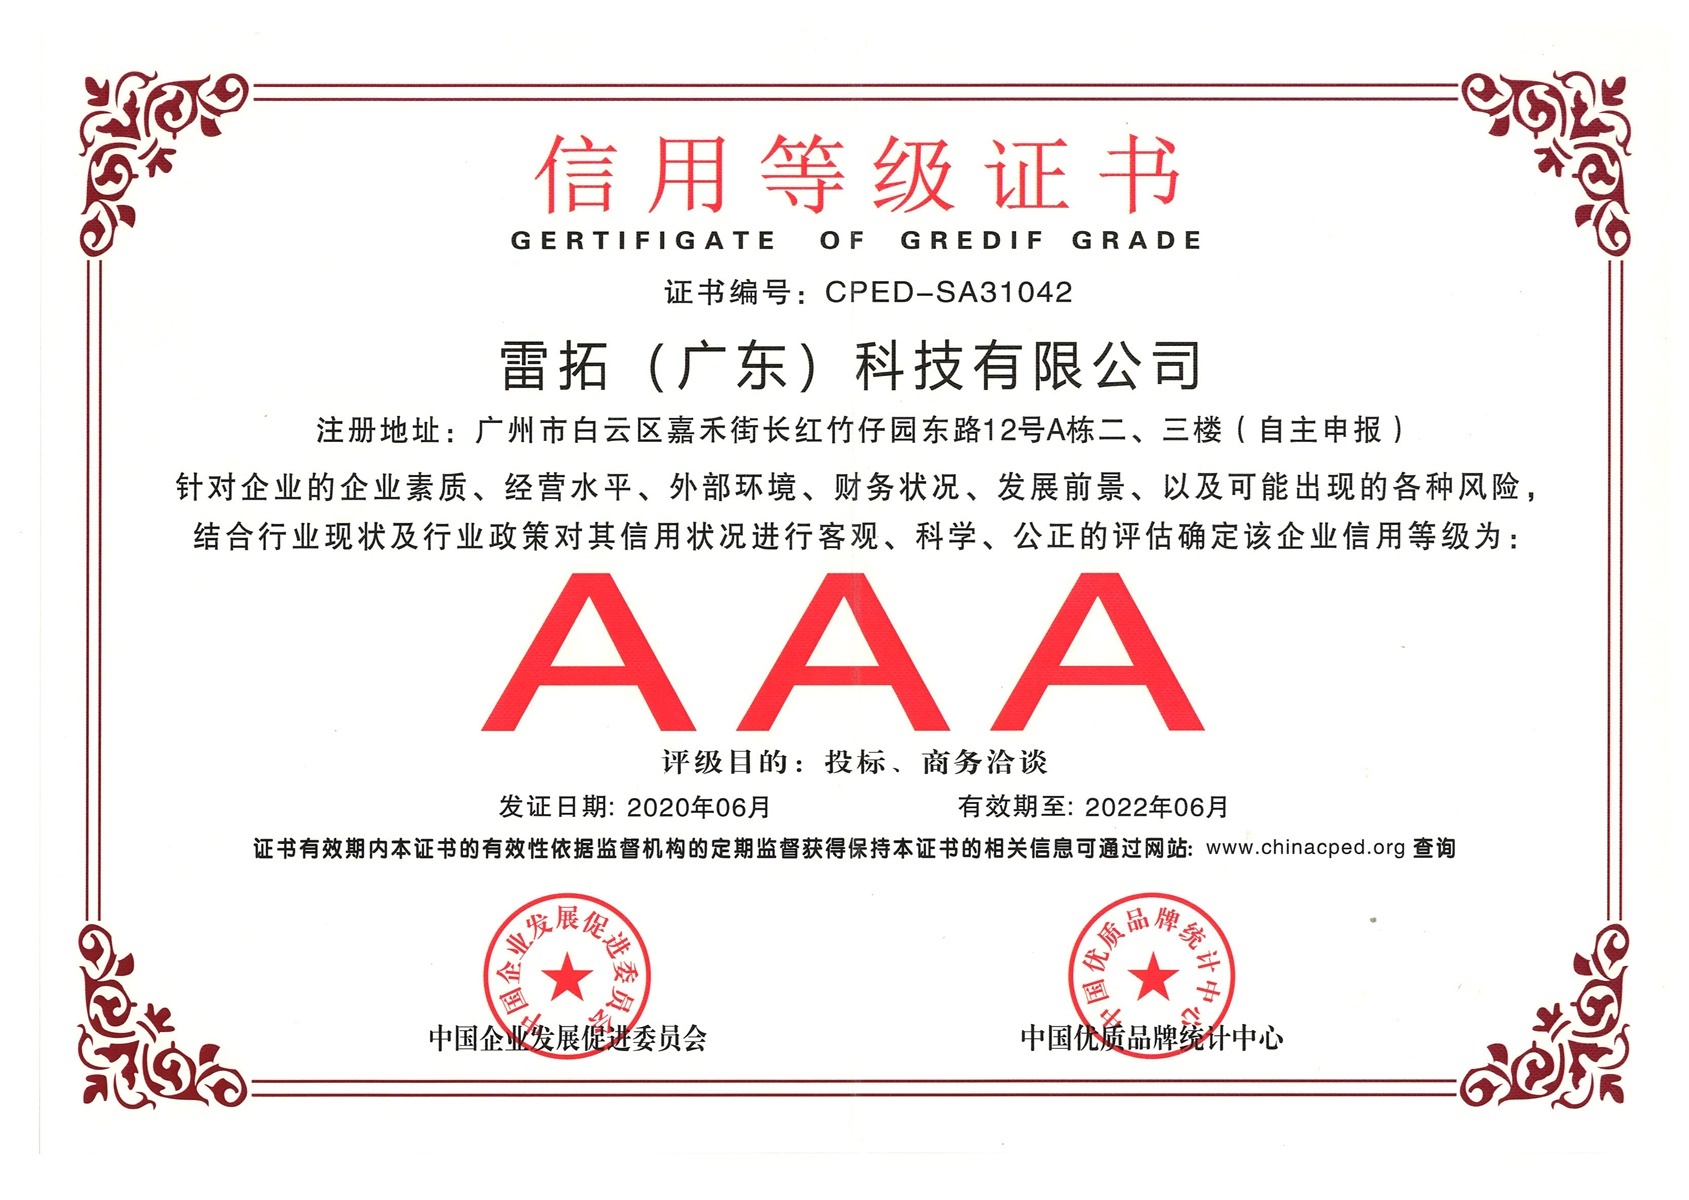 Credit Rating Certificate AAA